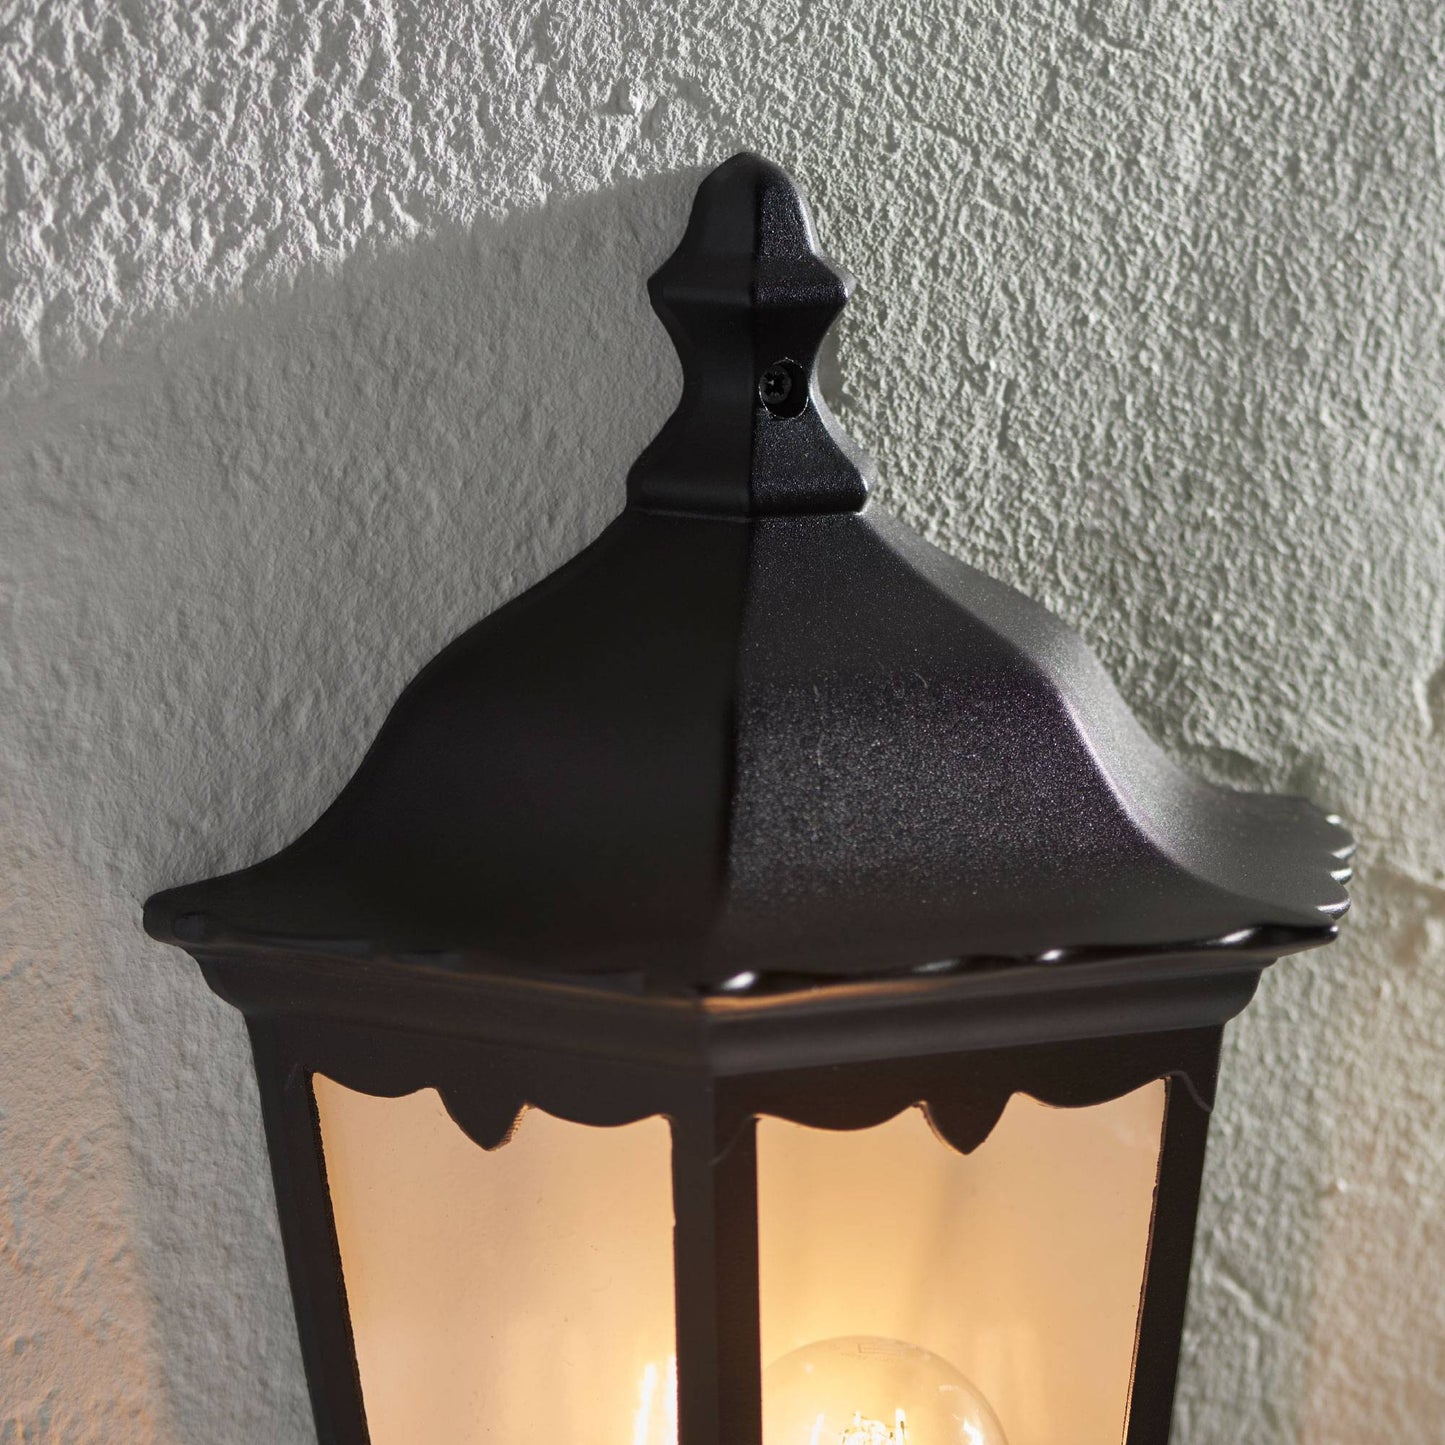 Burford Outdoor Coach Lantern Wall Light